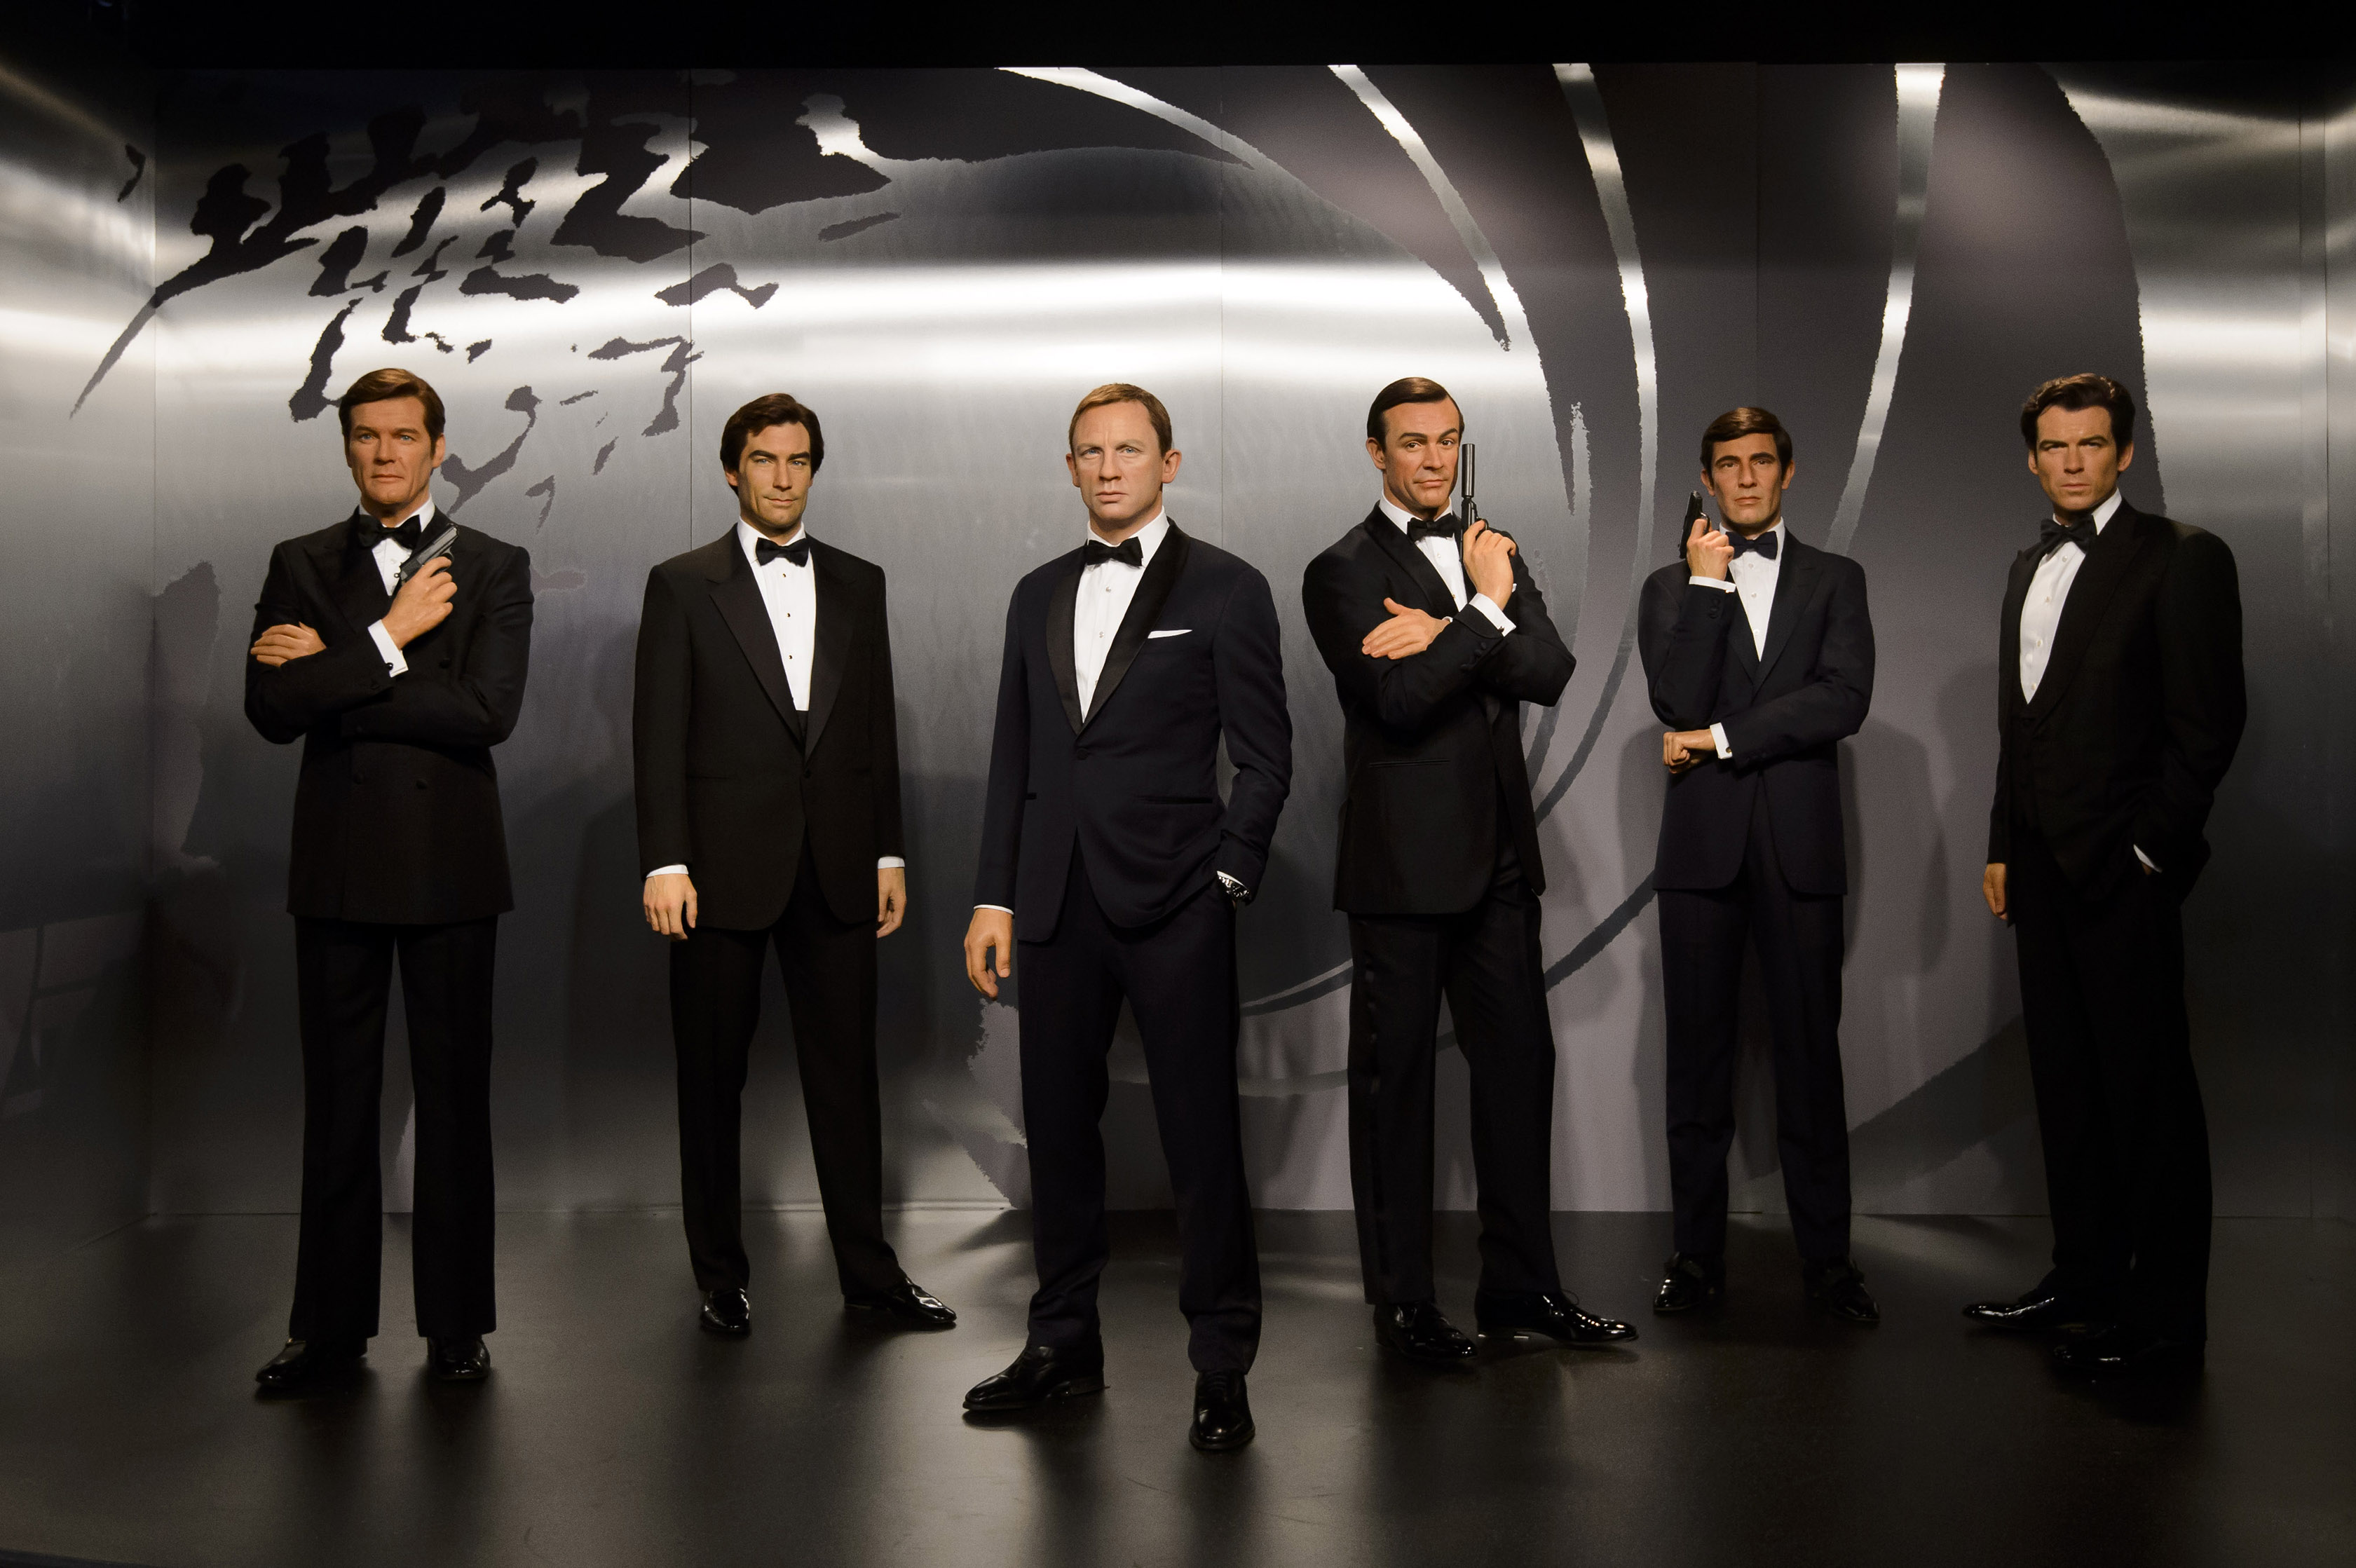 All 6 James Bonds together at Tussauds